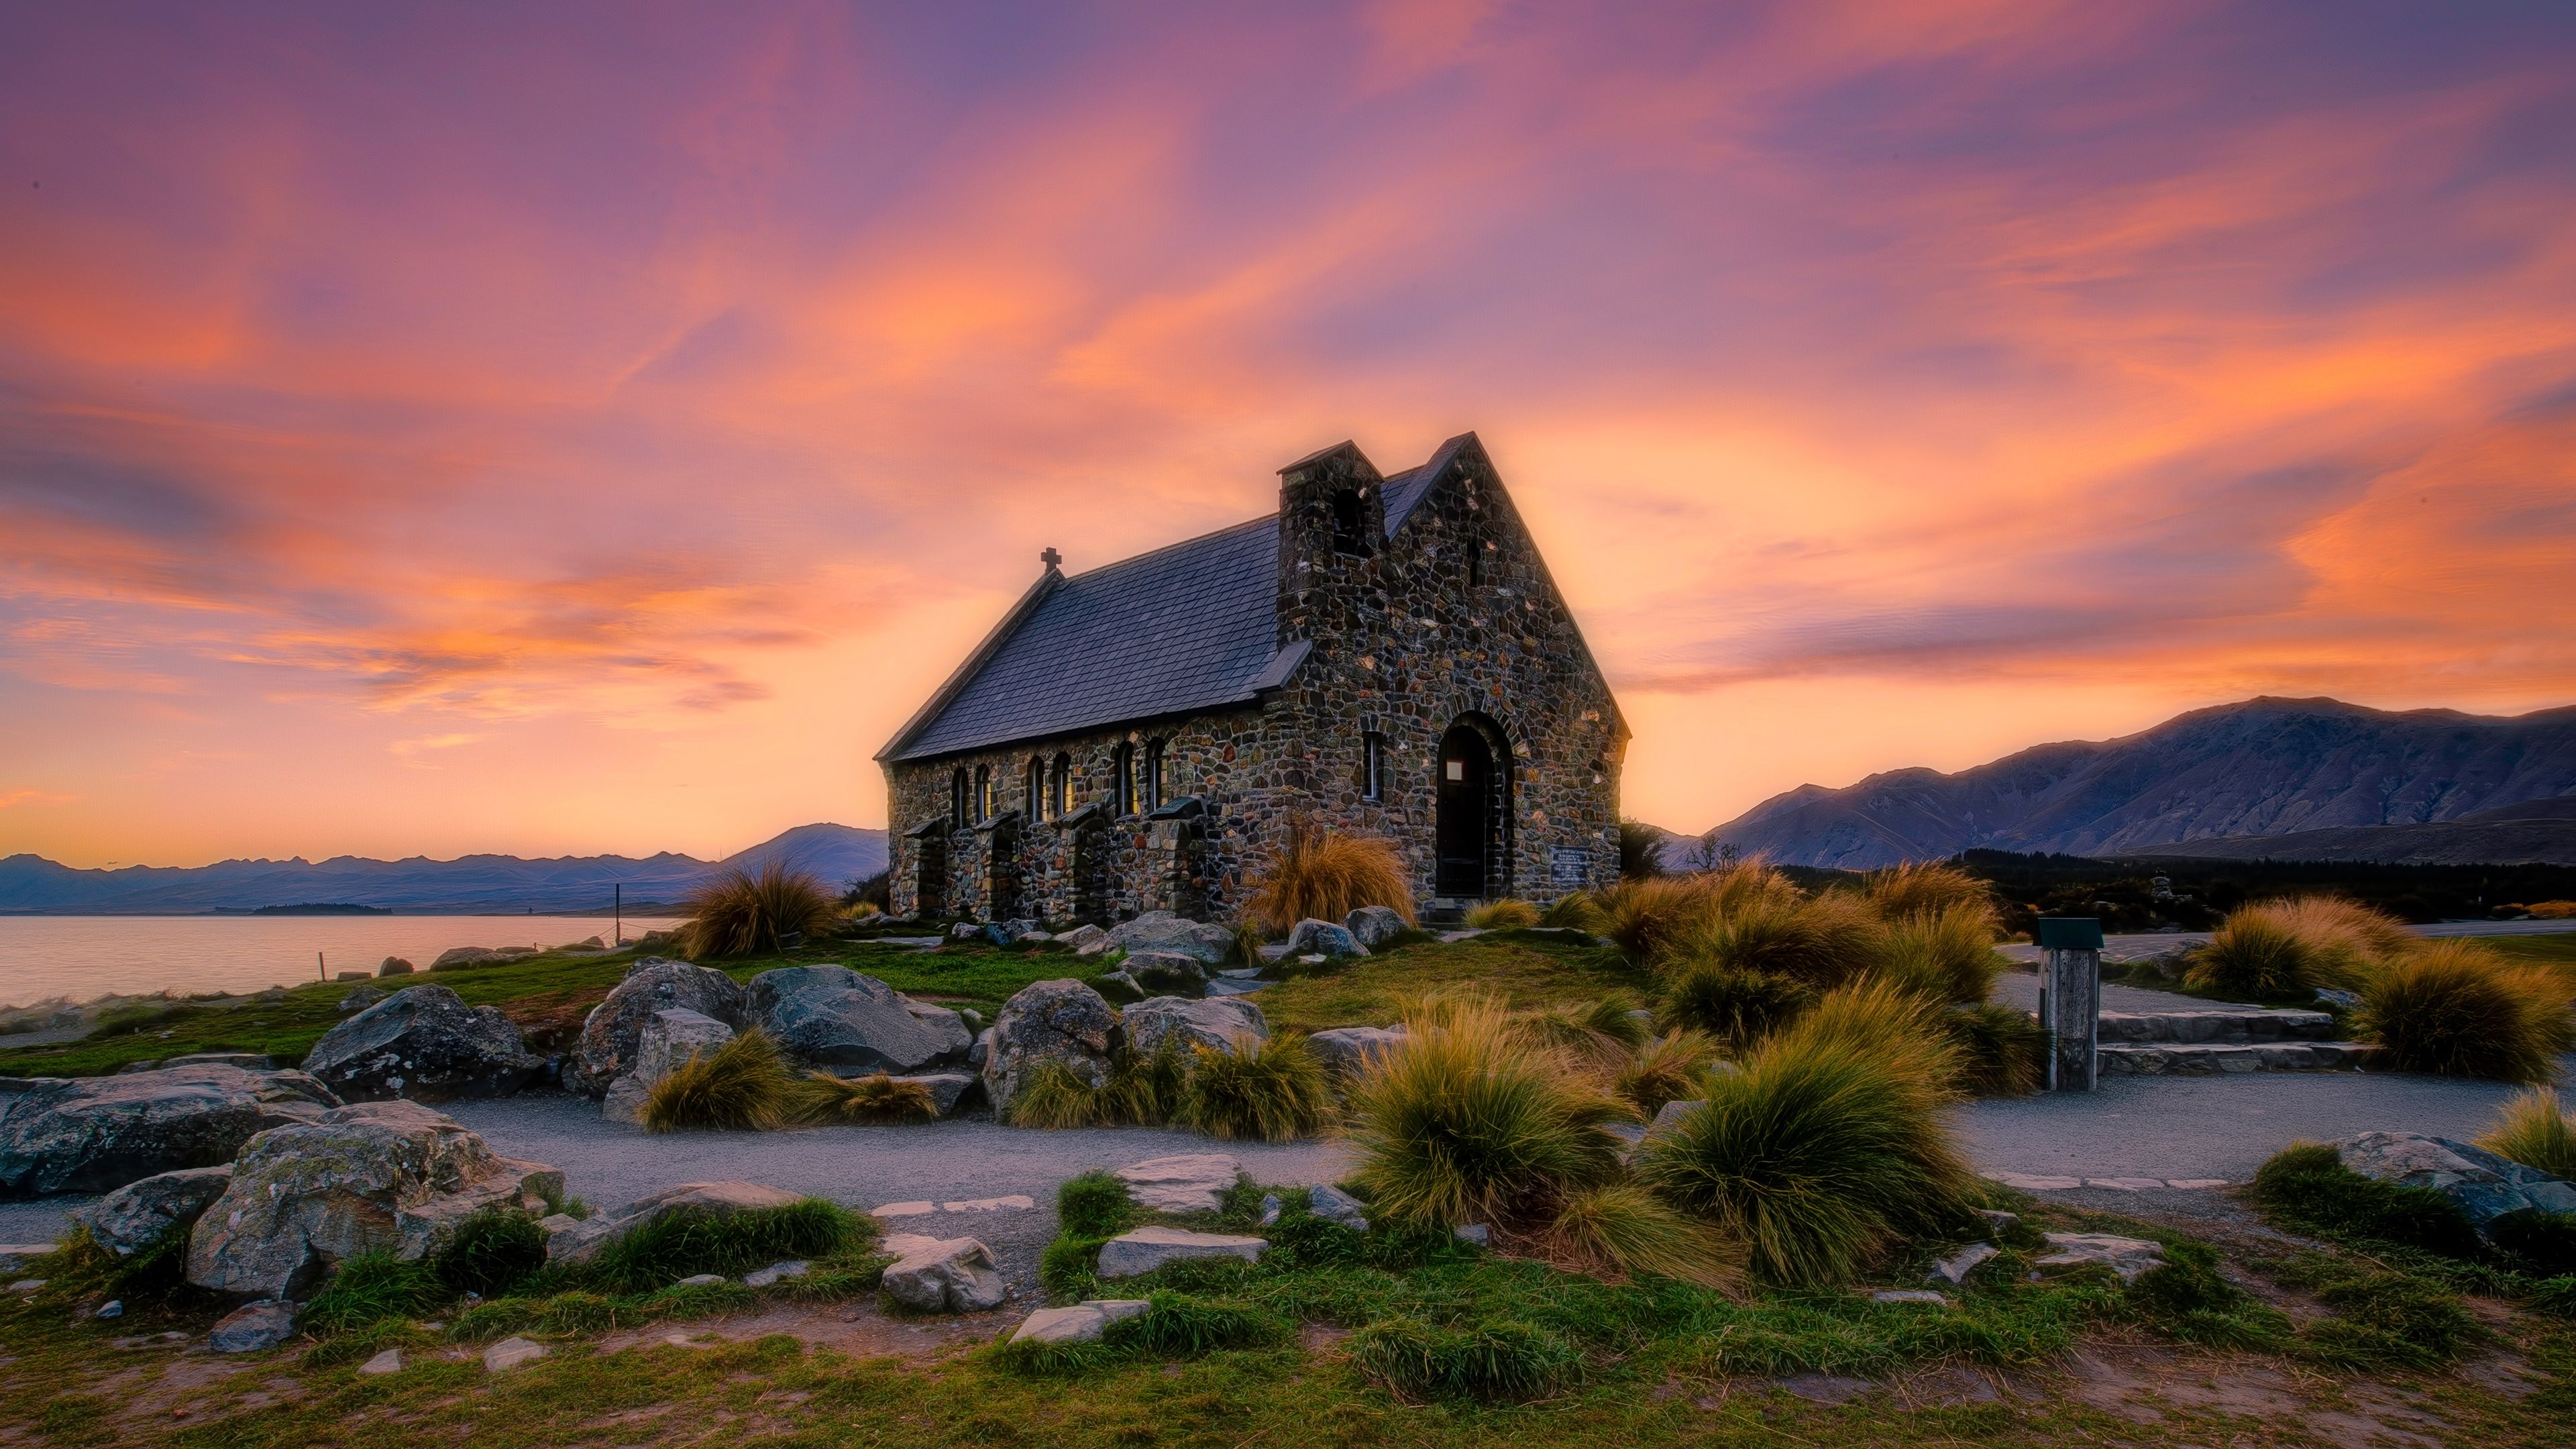 Small church at Sunset 4k Ultra HD Wallpaper